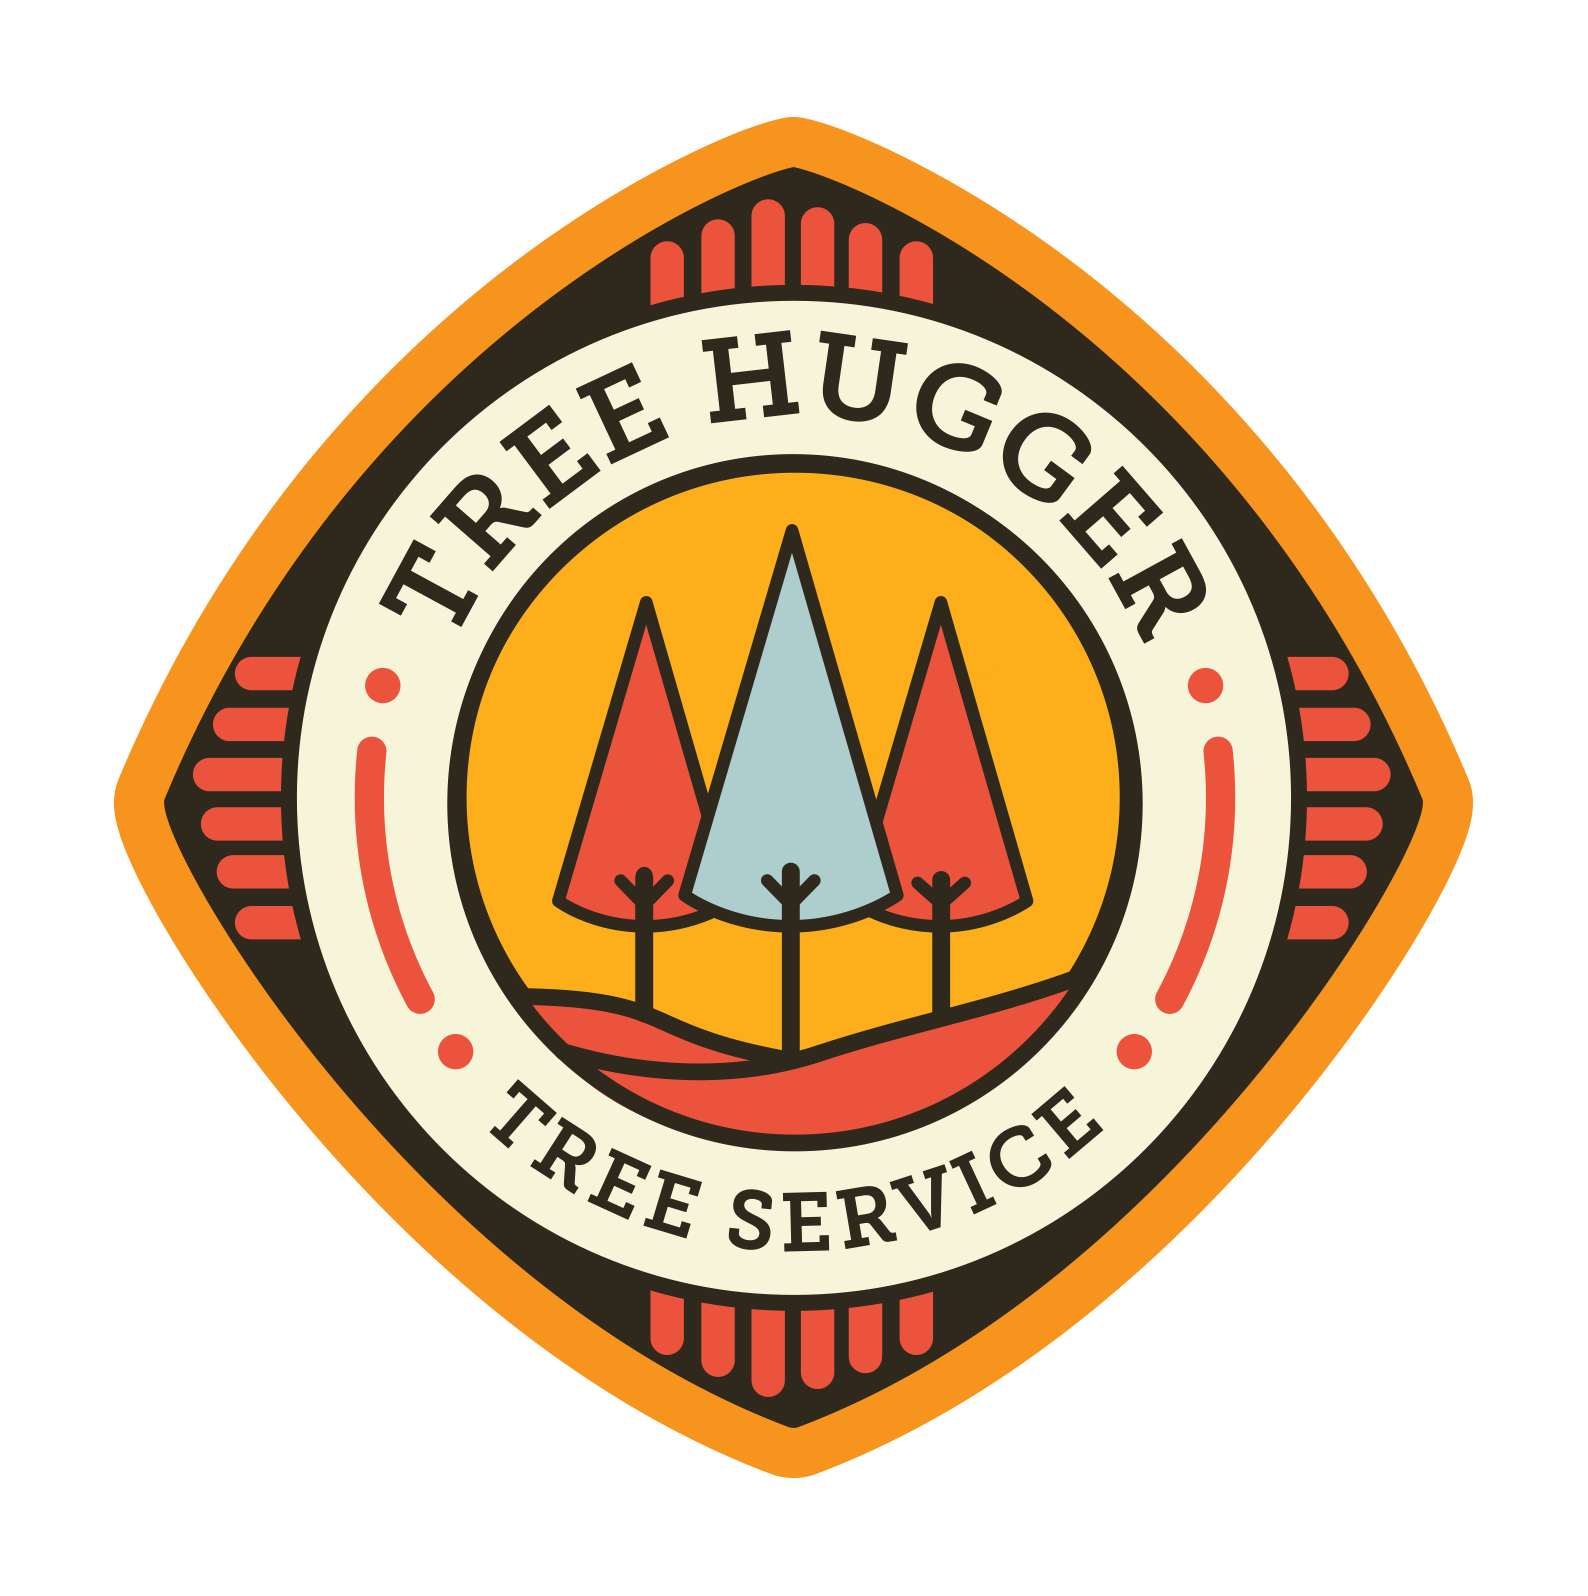 Treehugger Tree Service